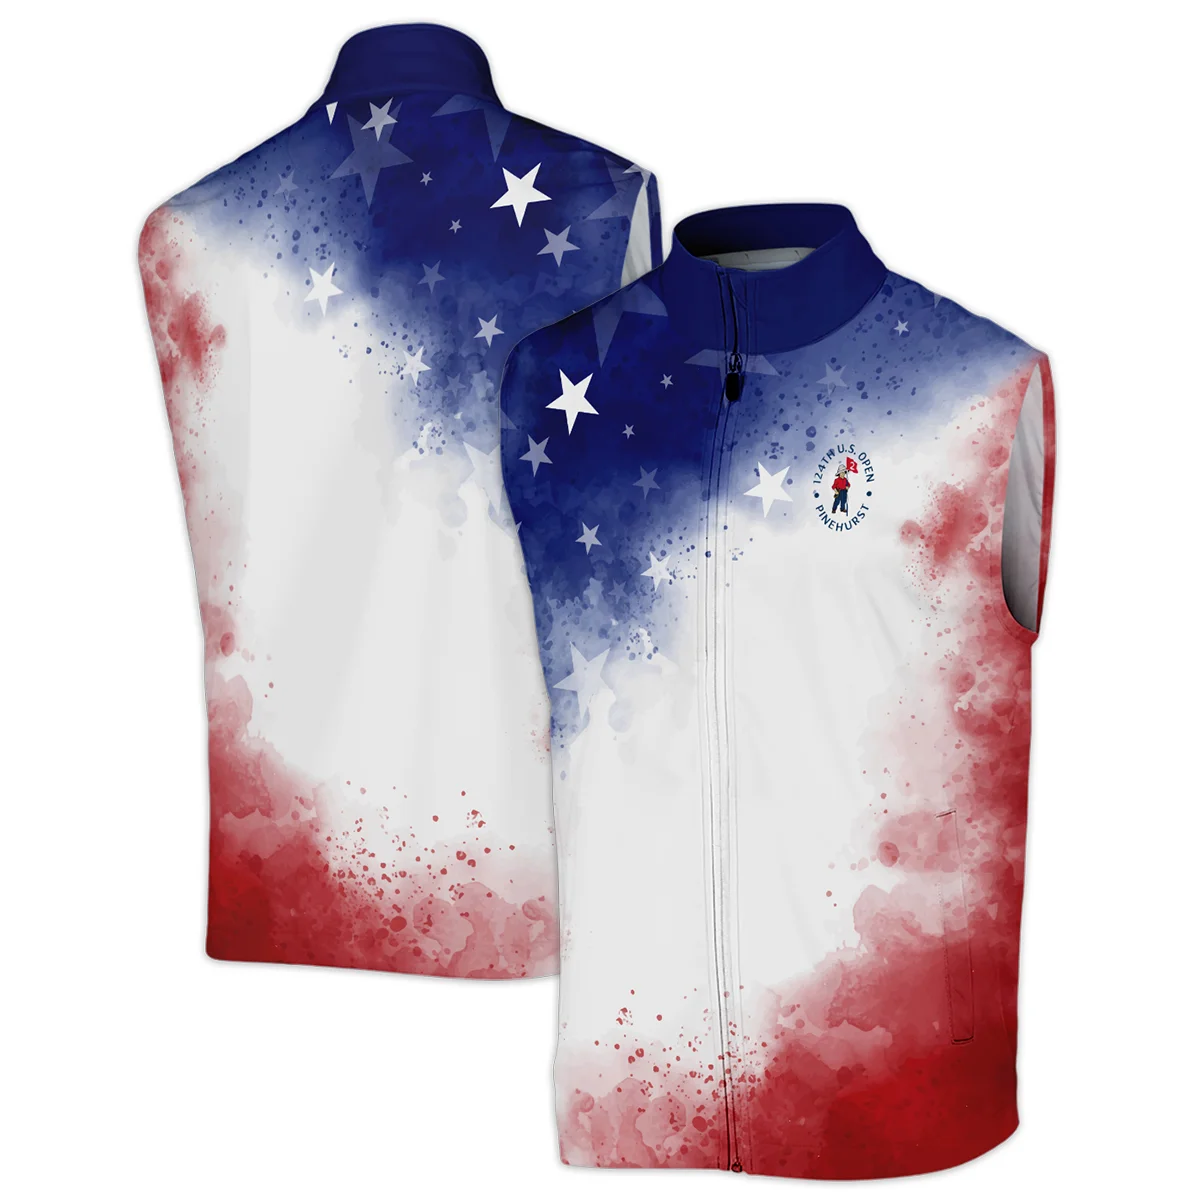 124th U.S. Open Pinehurst Ping Blue Red Watercolor Star White Backgound Polo Shirt Mandarin Collar Polo Shirt